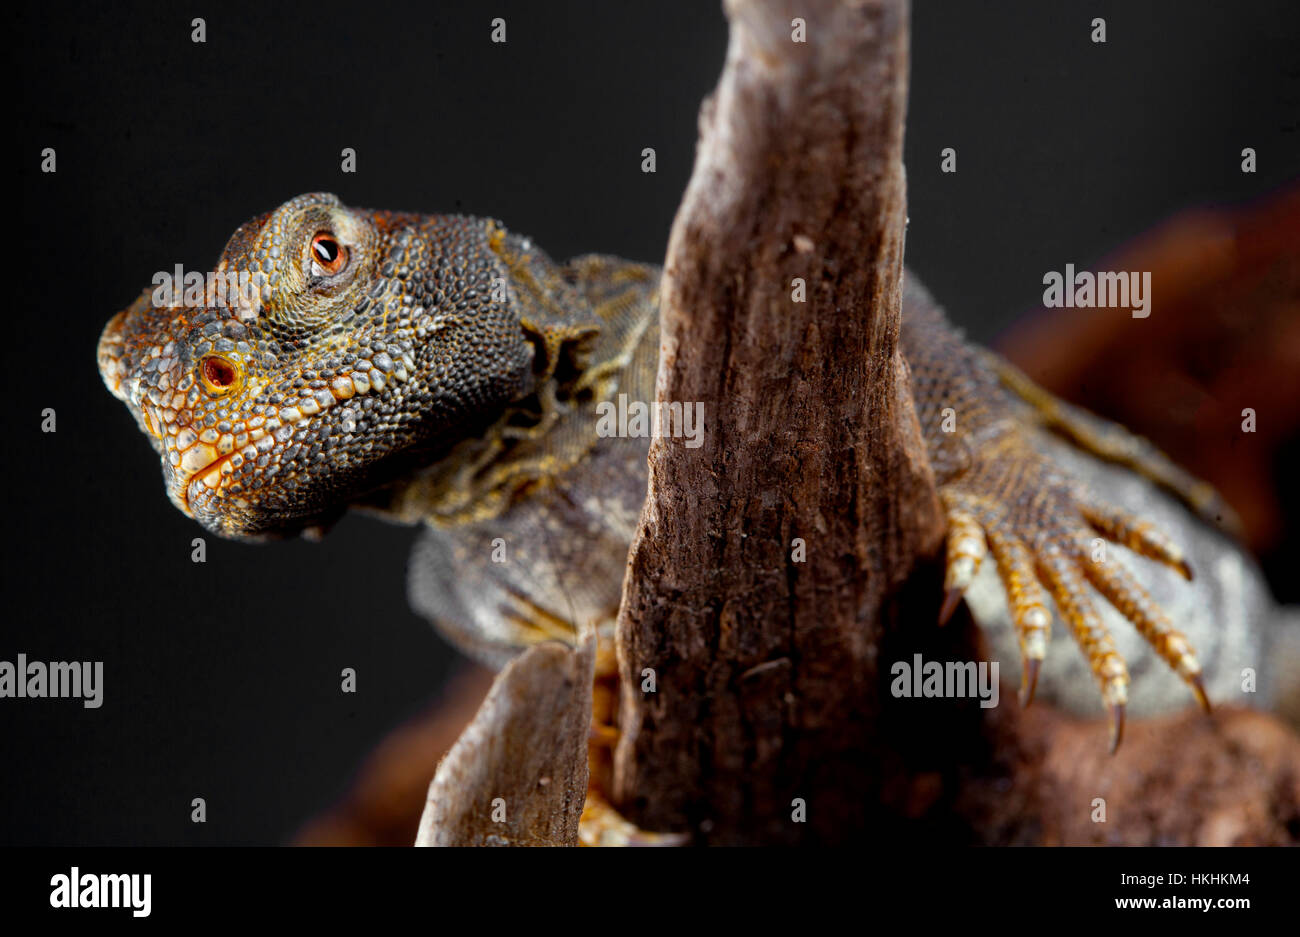 Iguana reptile portrait in studio with dark background Stock Photo